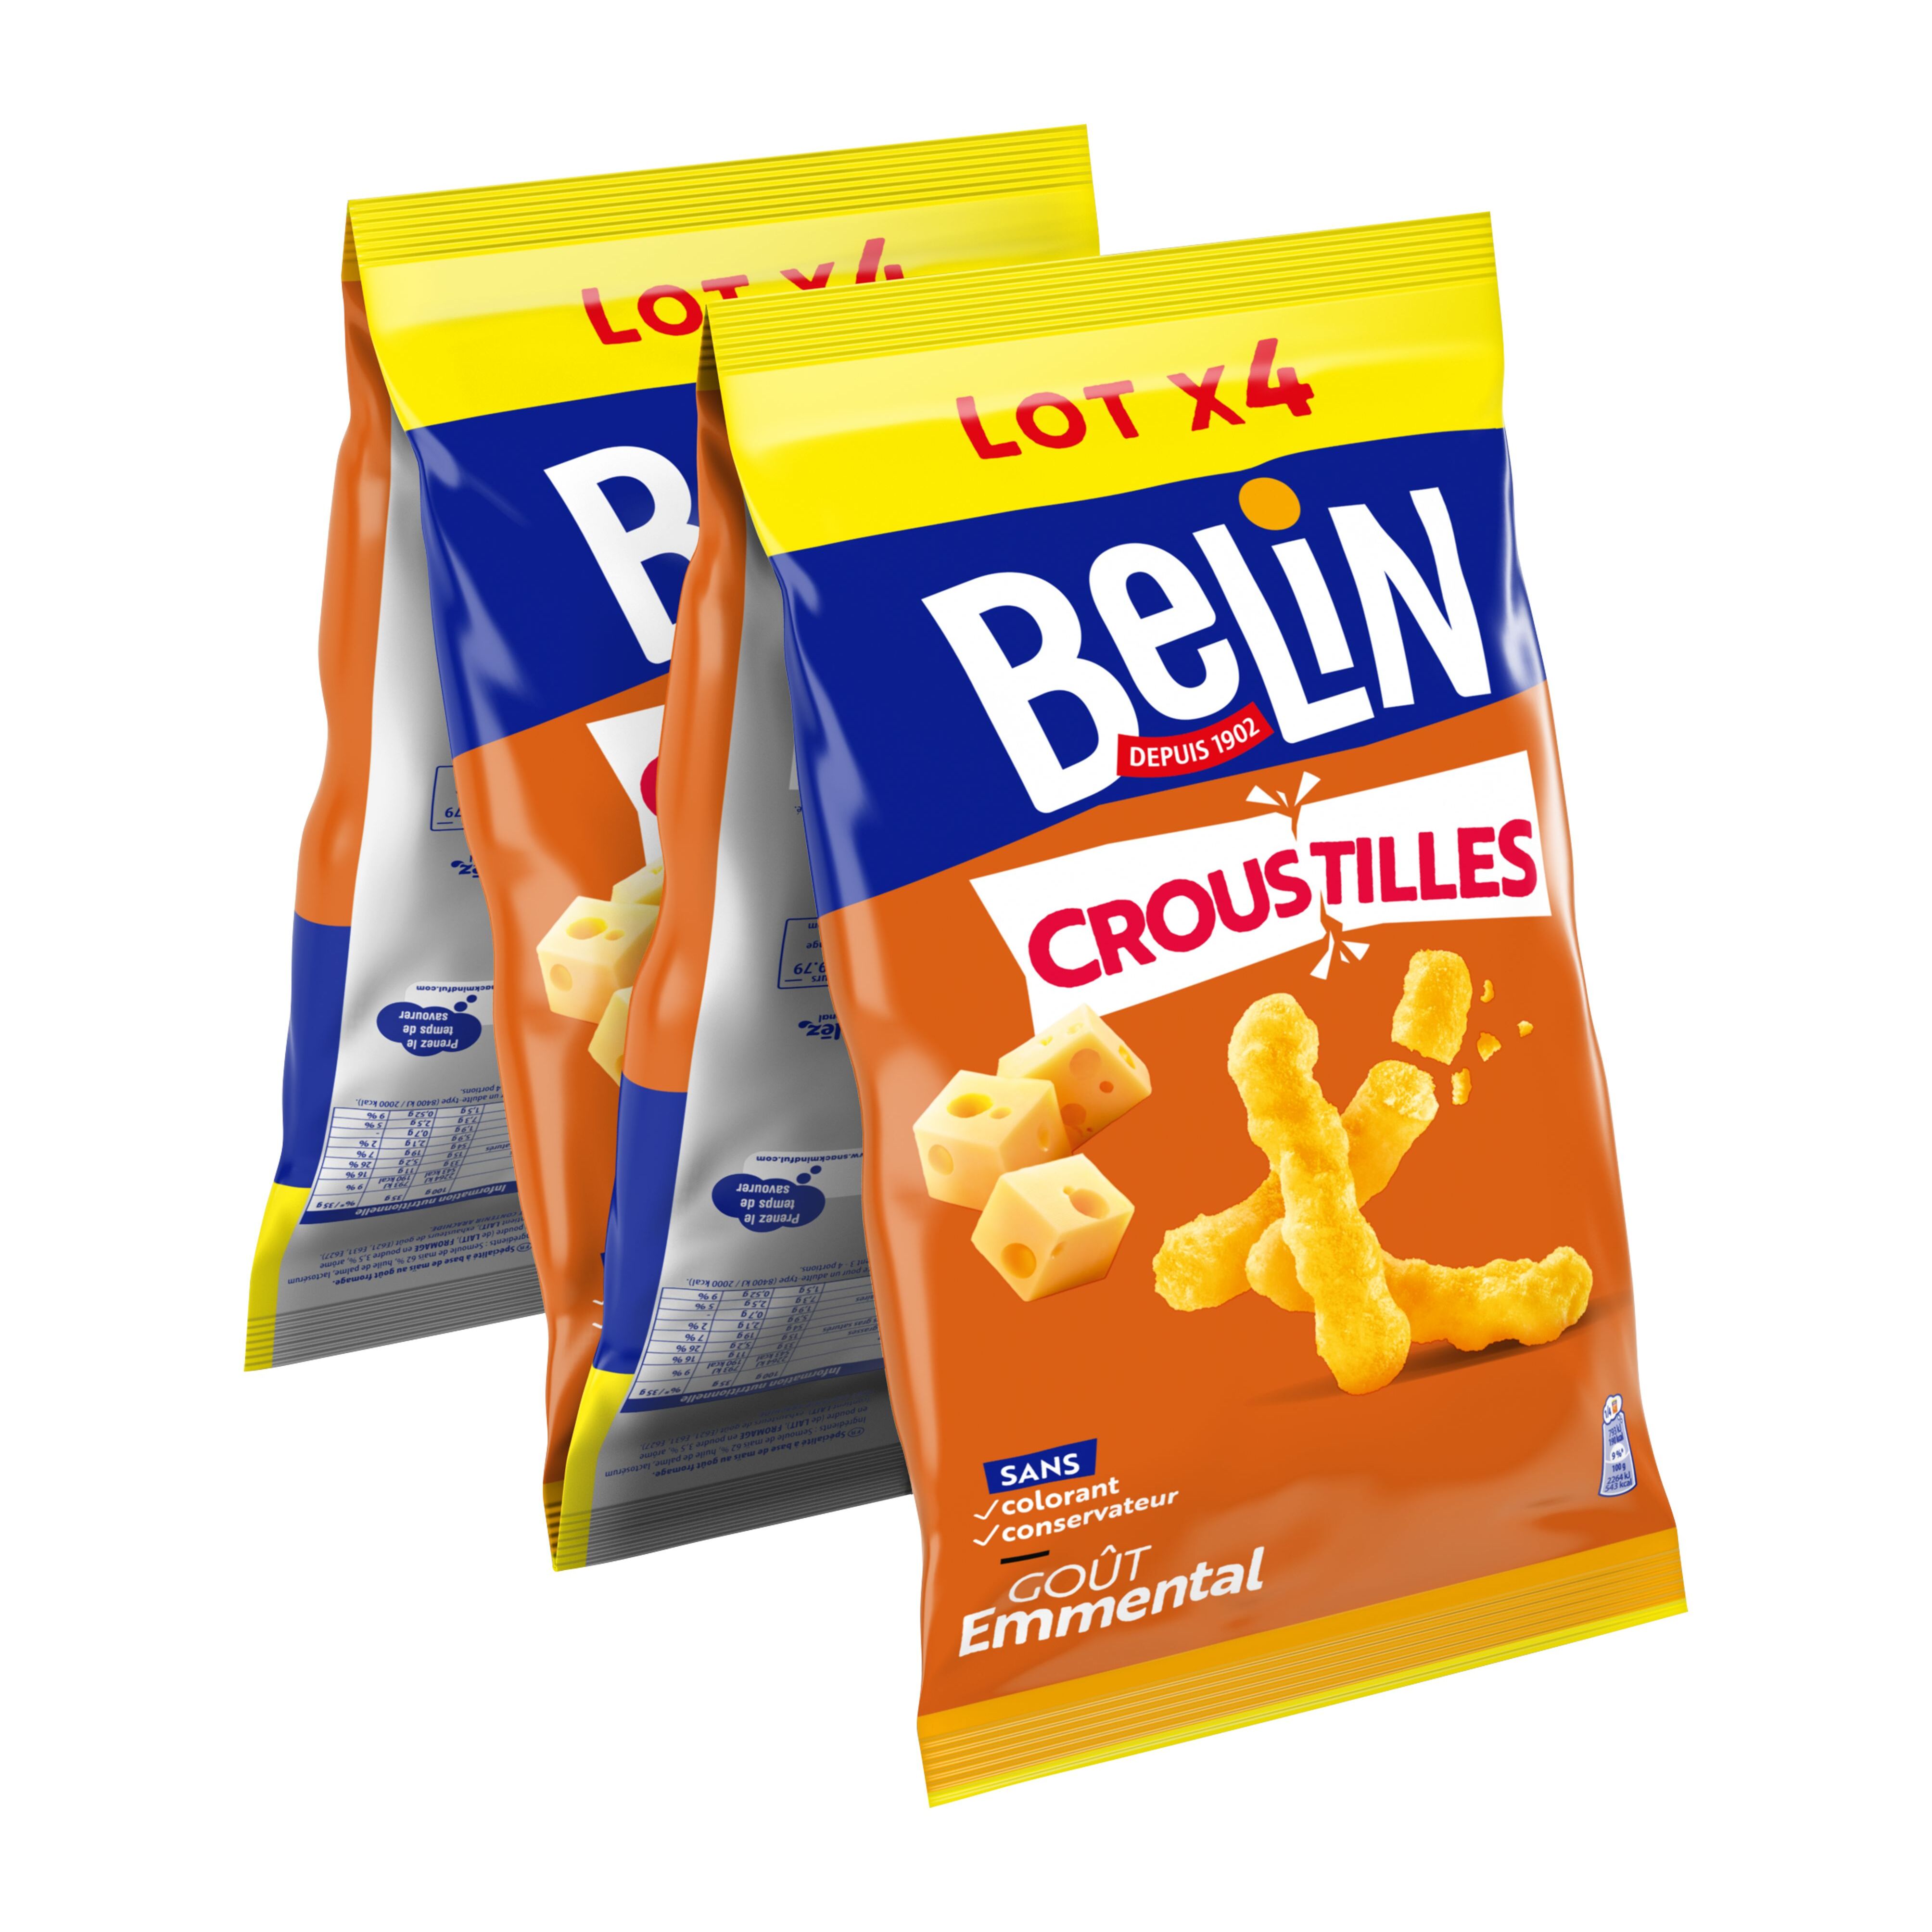 BELIN Croustilles goût emmental 4x138g pas cher 